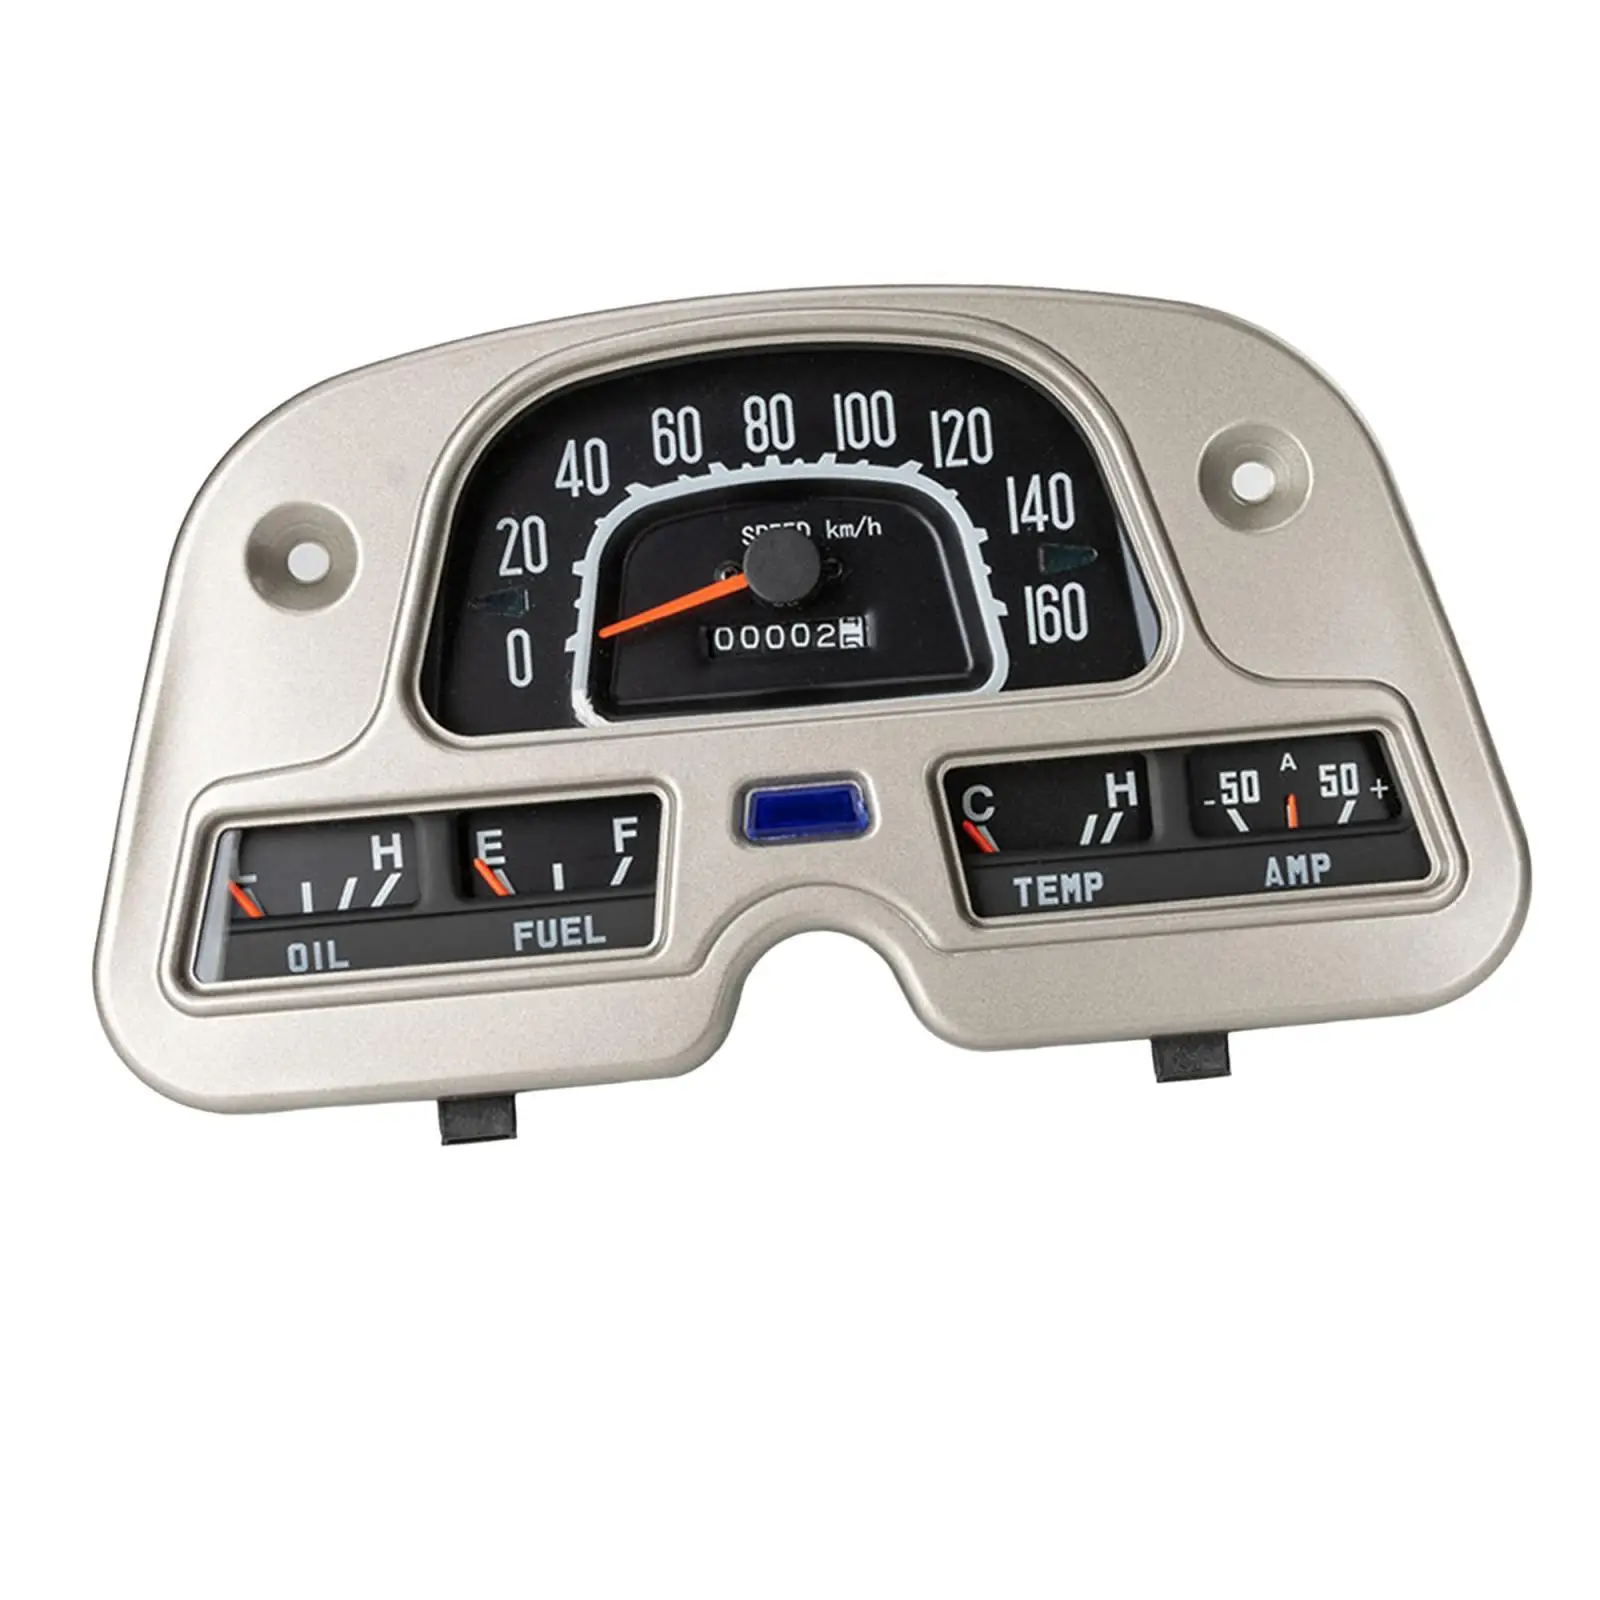 Car Speedometer Gauge Cluster 8310060180 Replace for Bj46 FJ40 Bj40 Hj47 Bj42